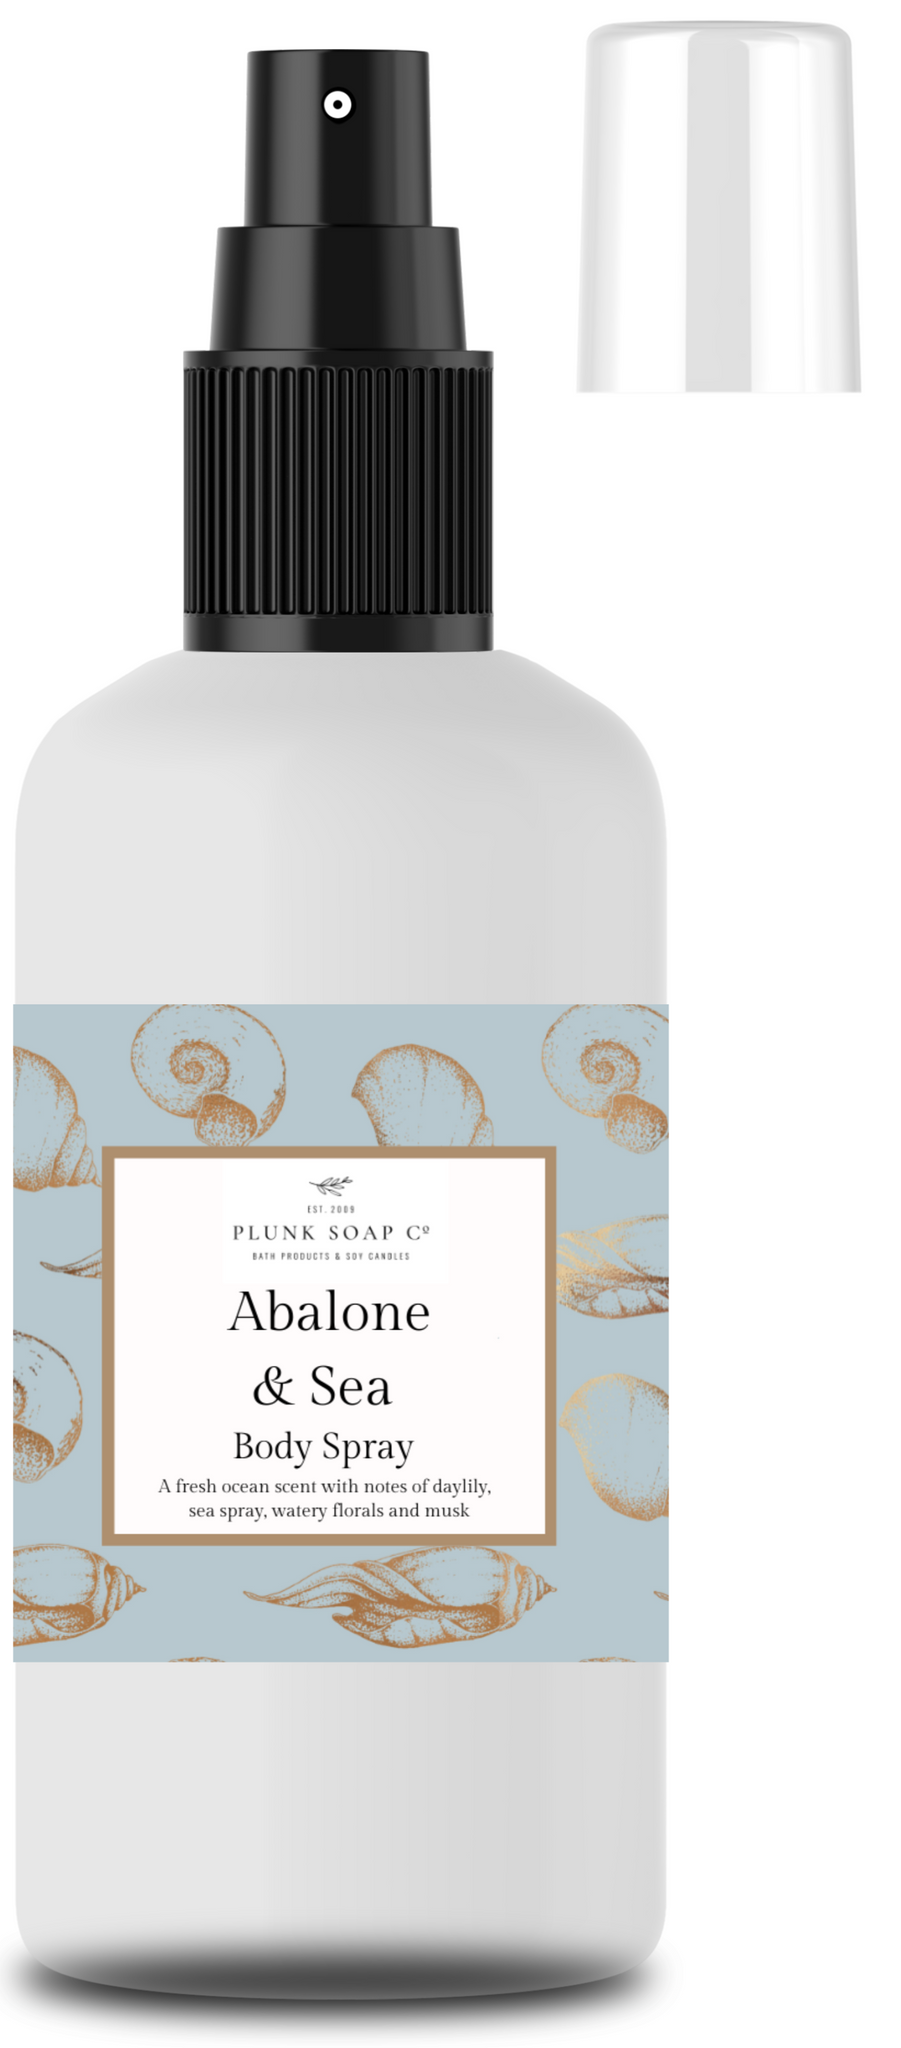 Abalone and Sea body spray